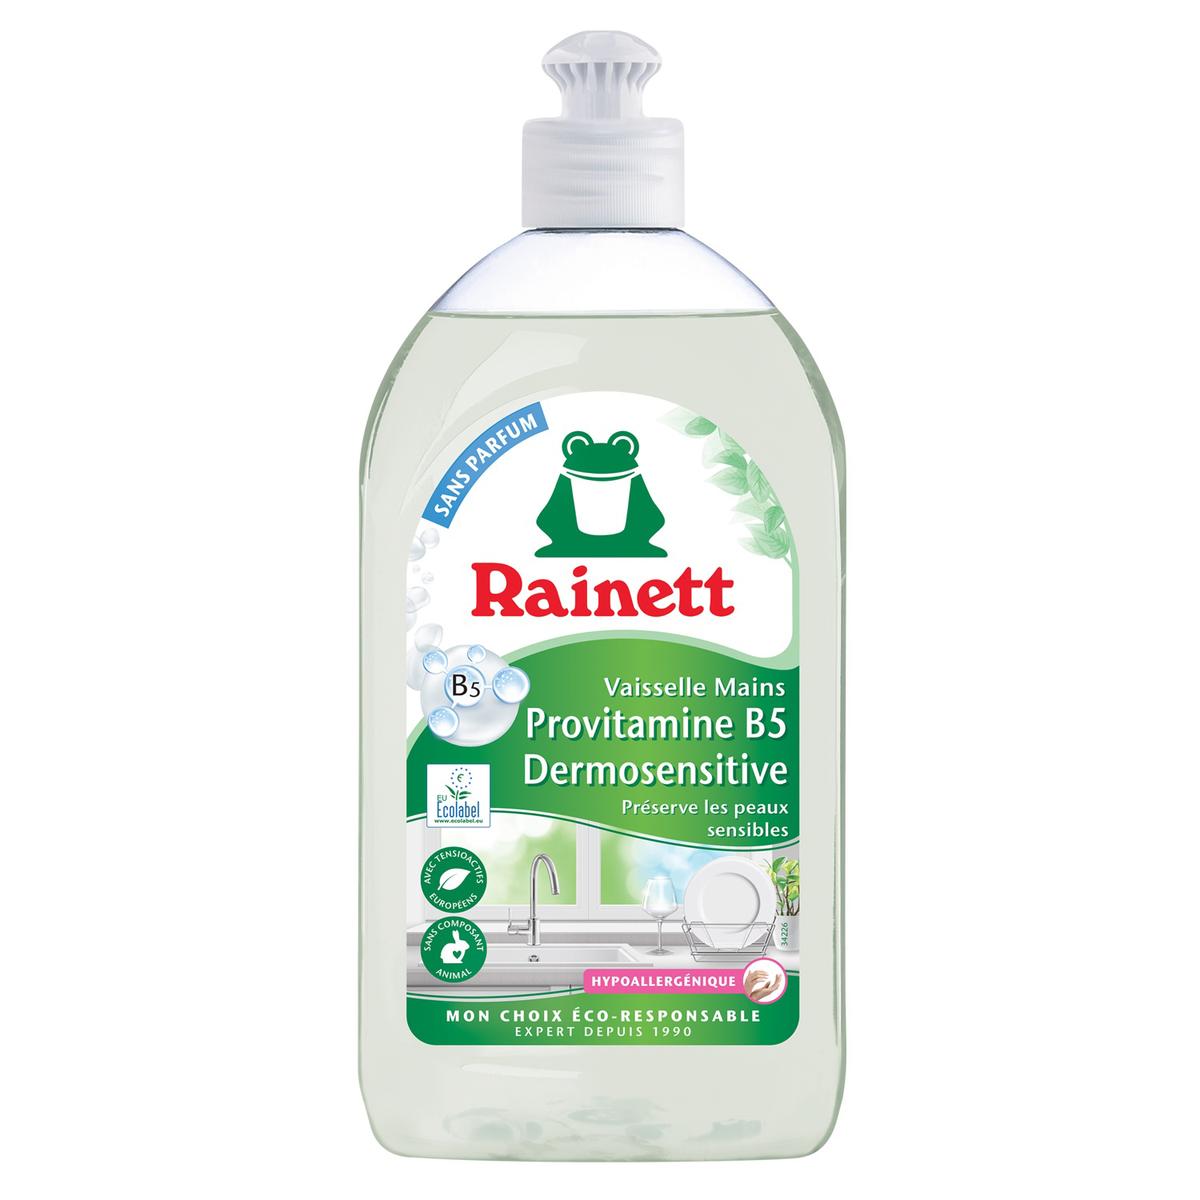 Rainett Liquide vaisselle mains 